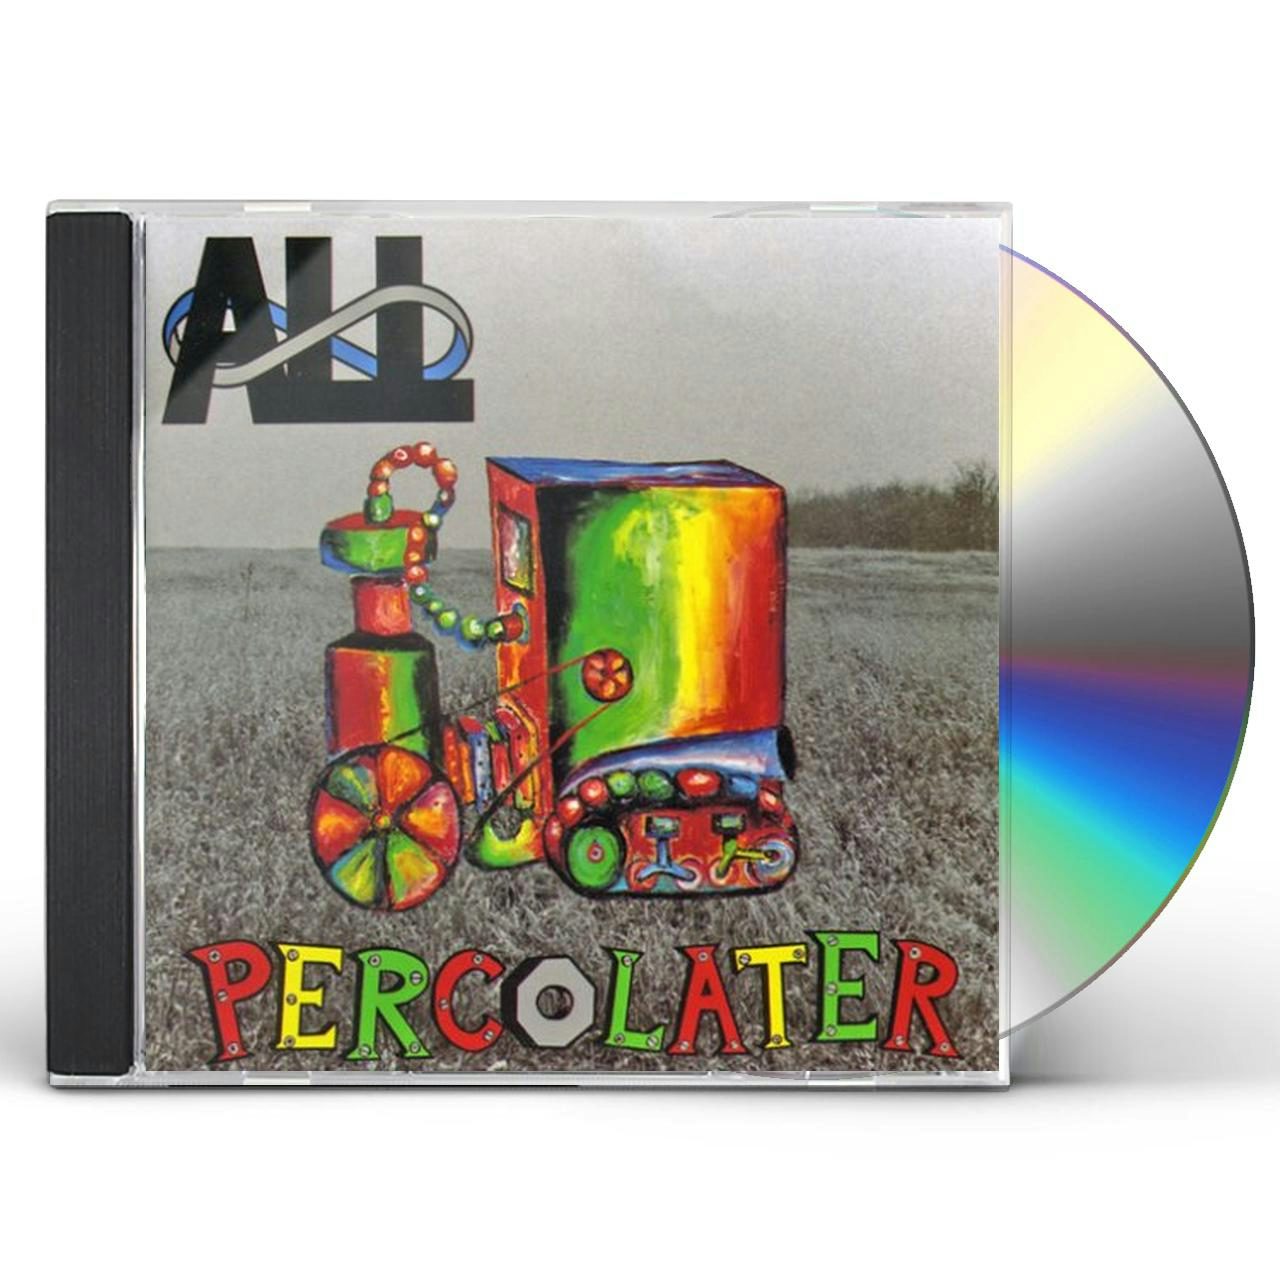 All PERCOLATER CD